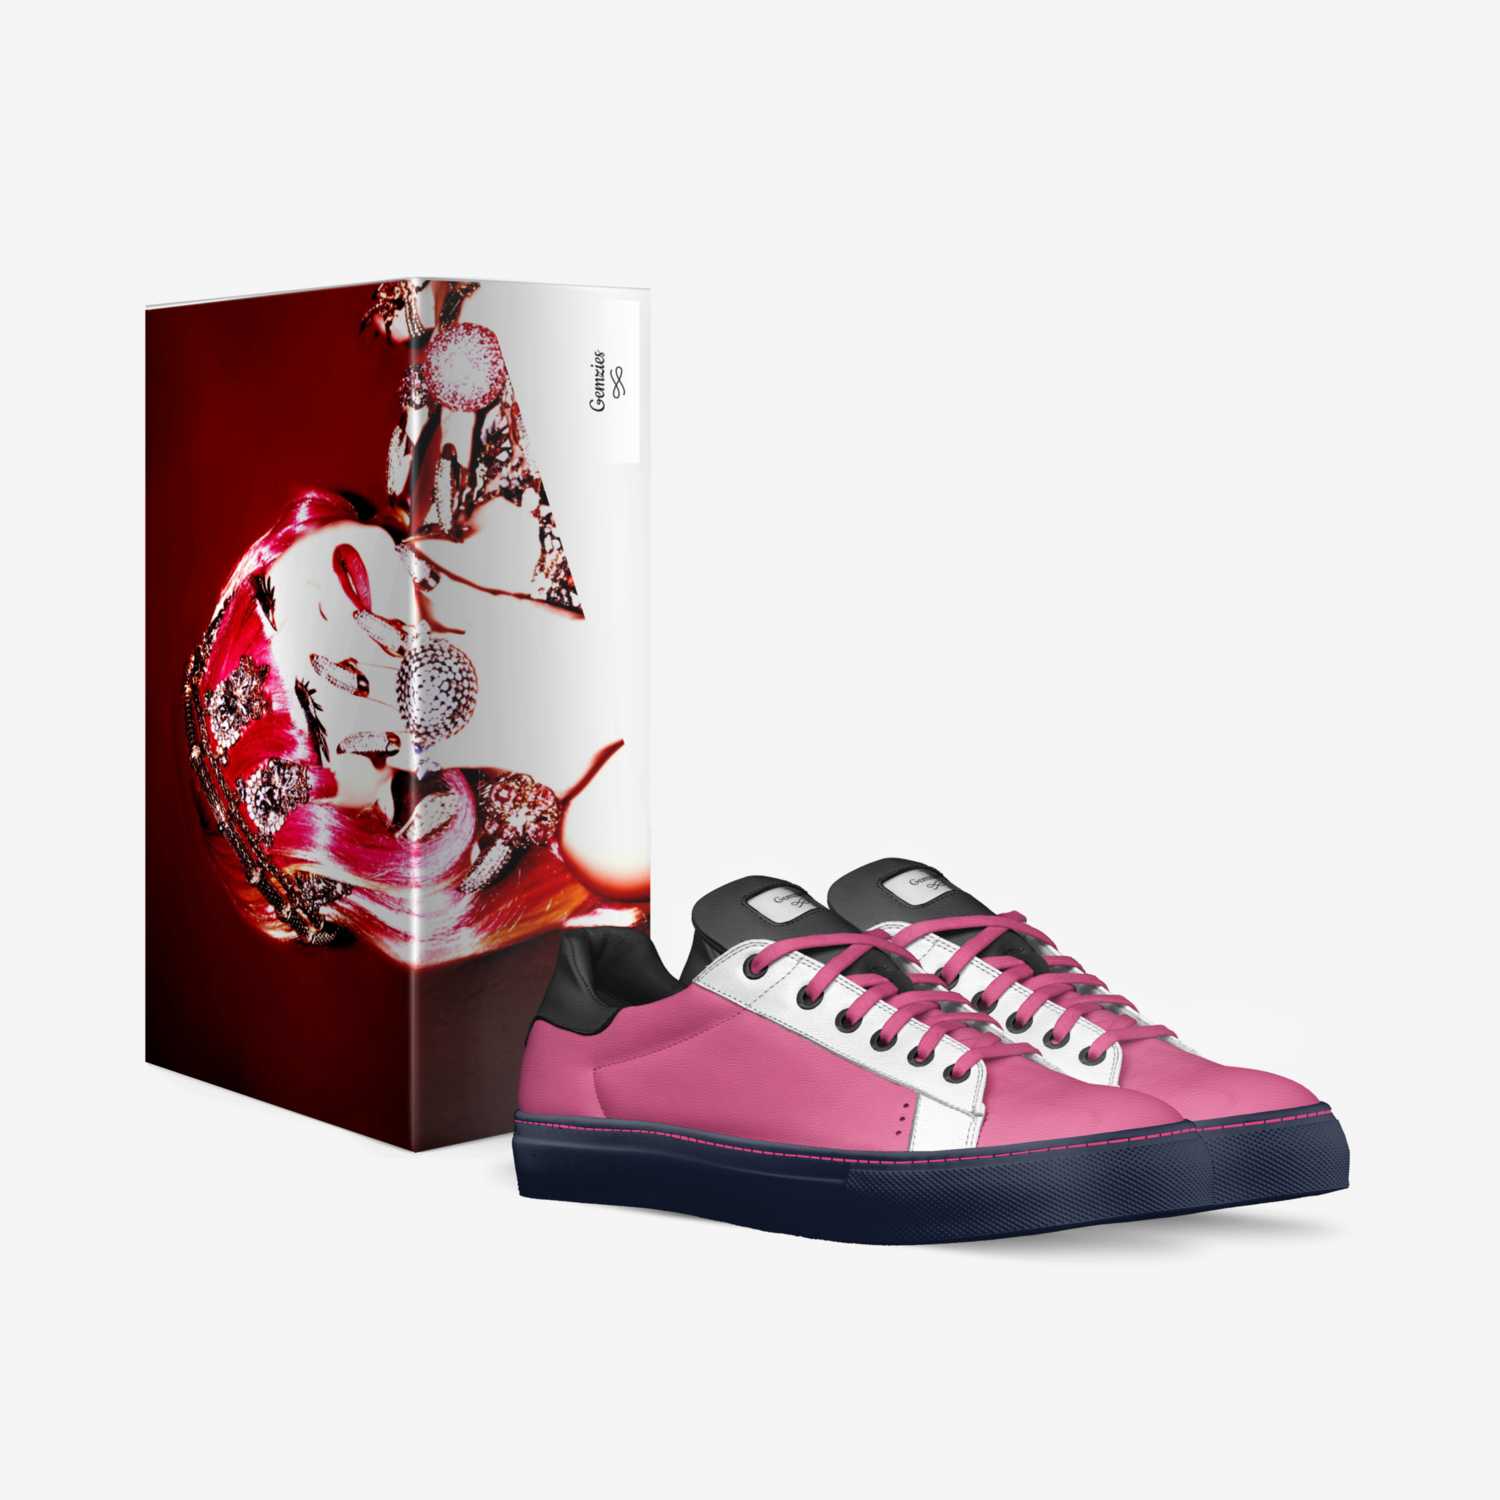 Gemzies custom made in Italy shoes by Leelee Da Goddess Cruz | Box view